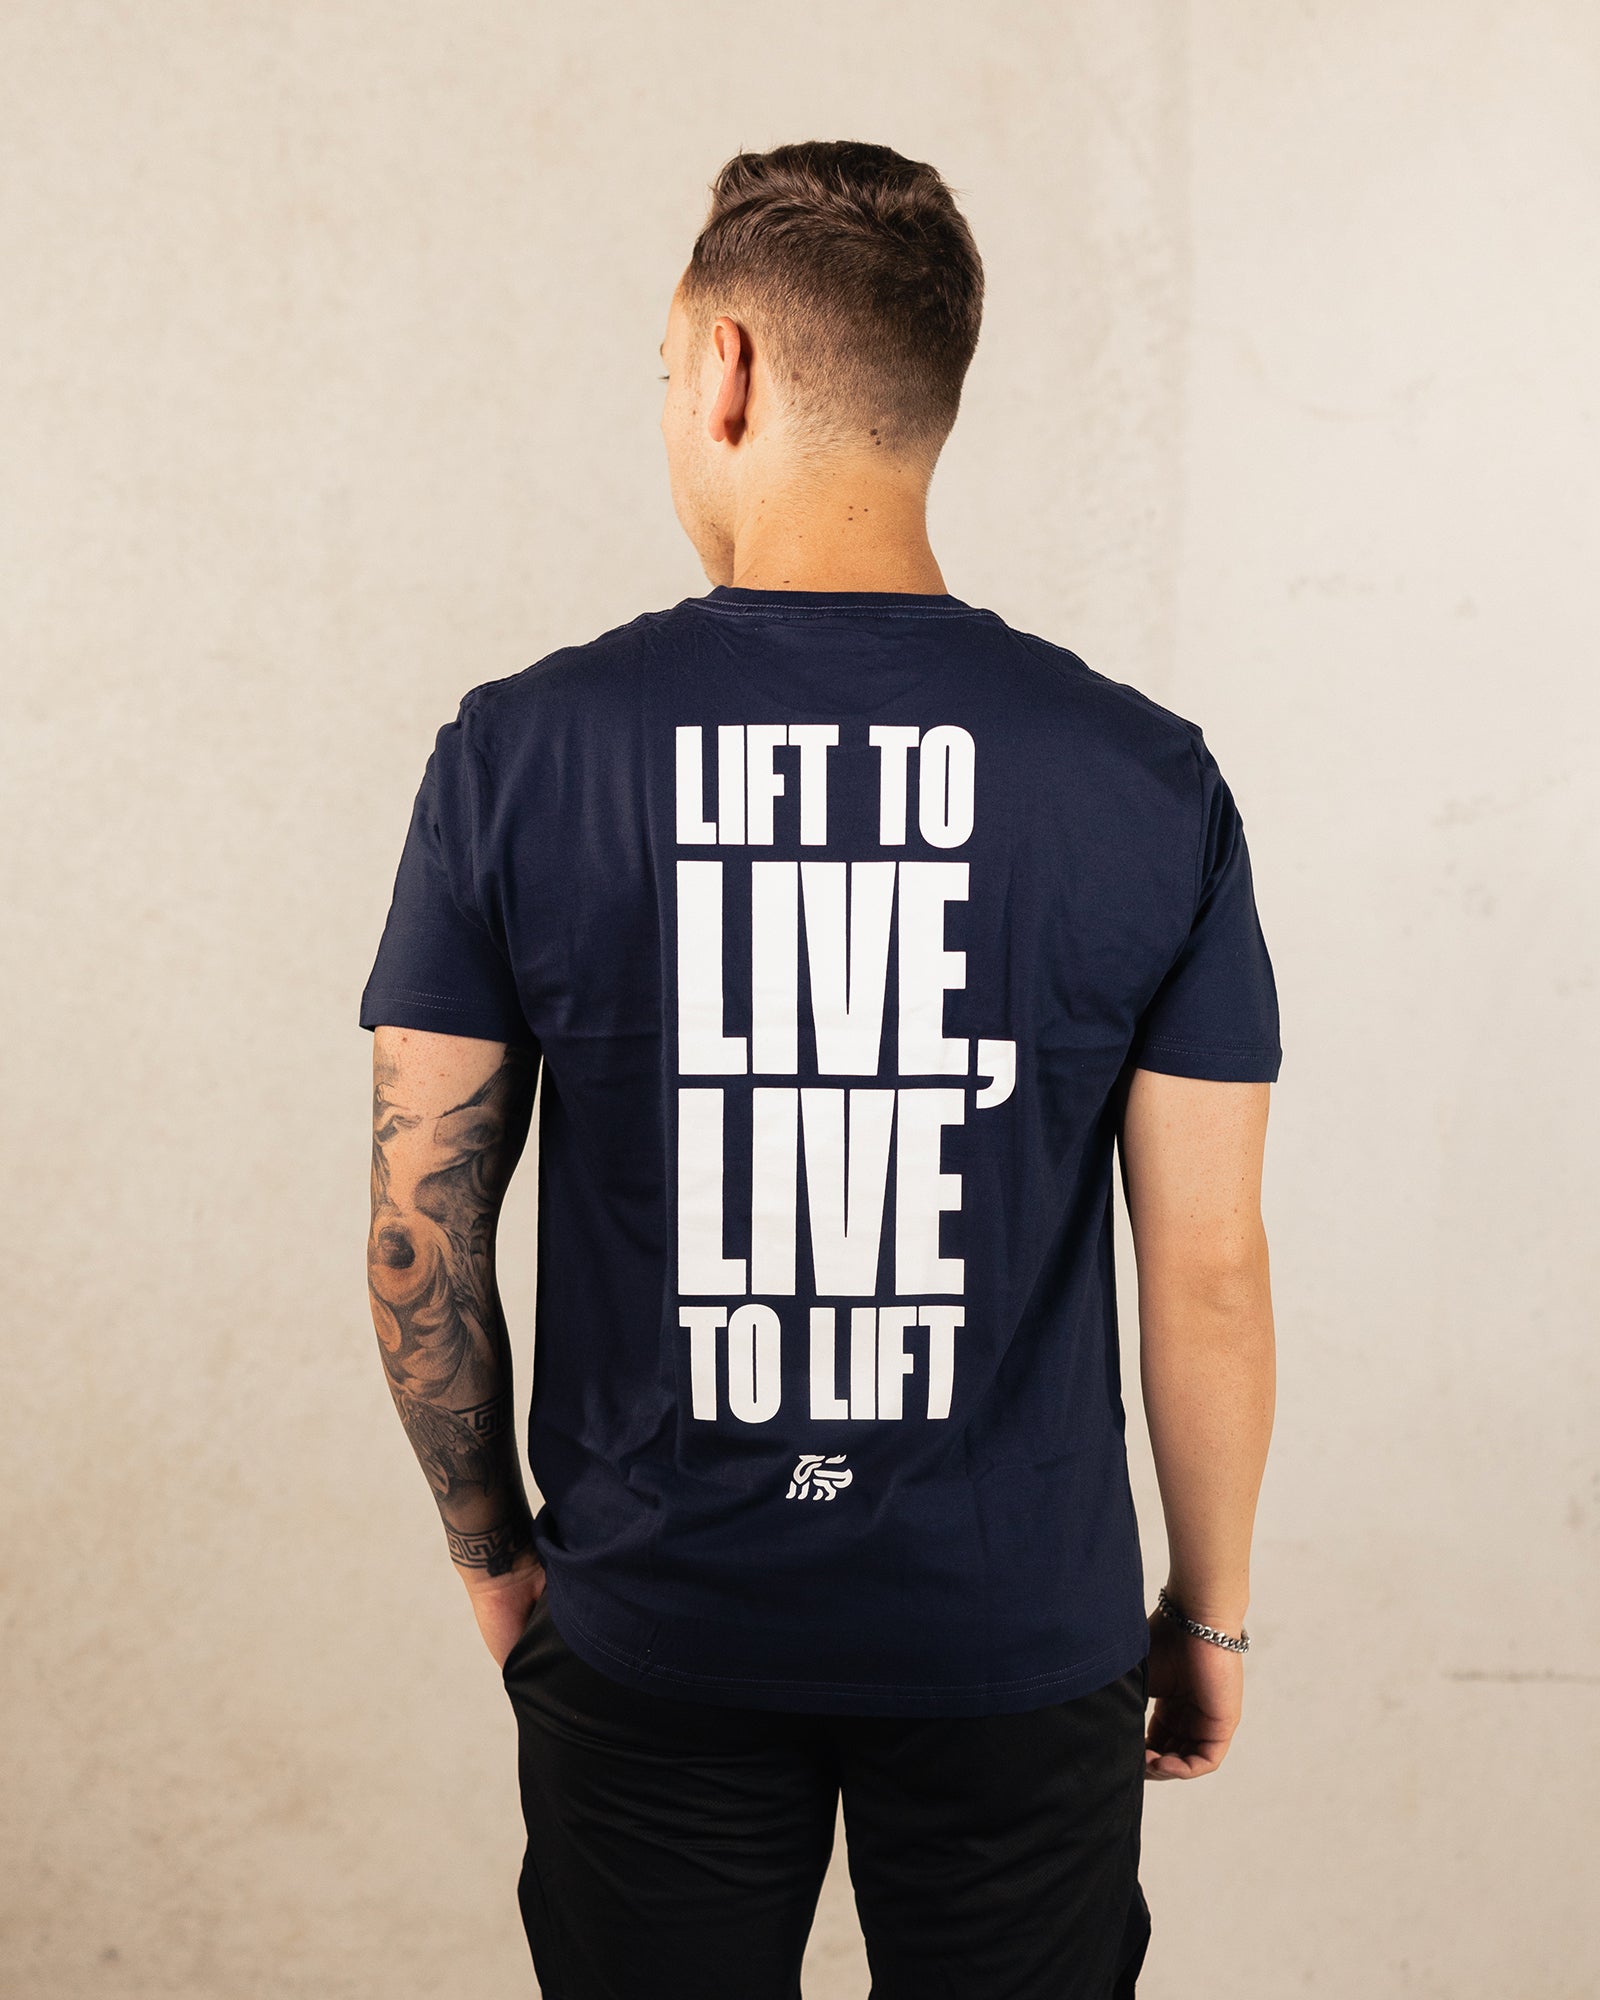 liftlife-LIVE-unisex-tee-2.jpg